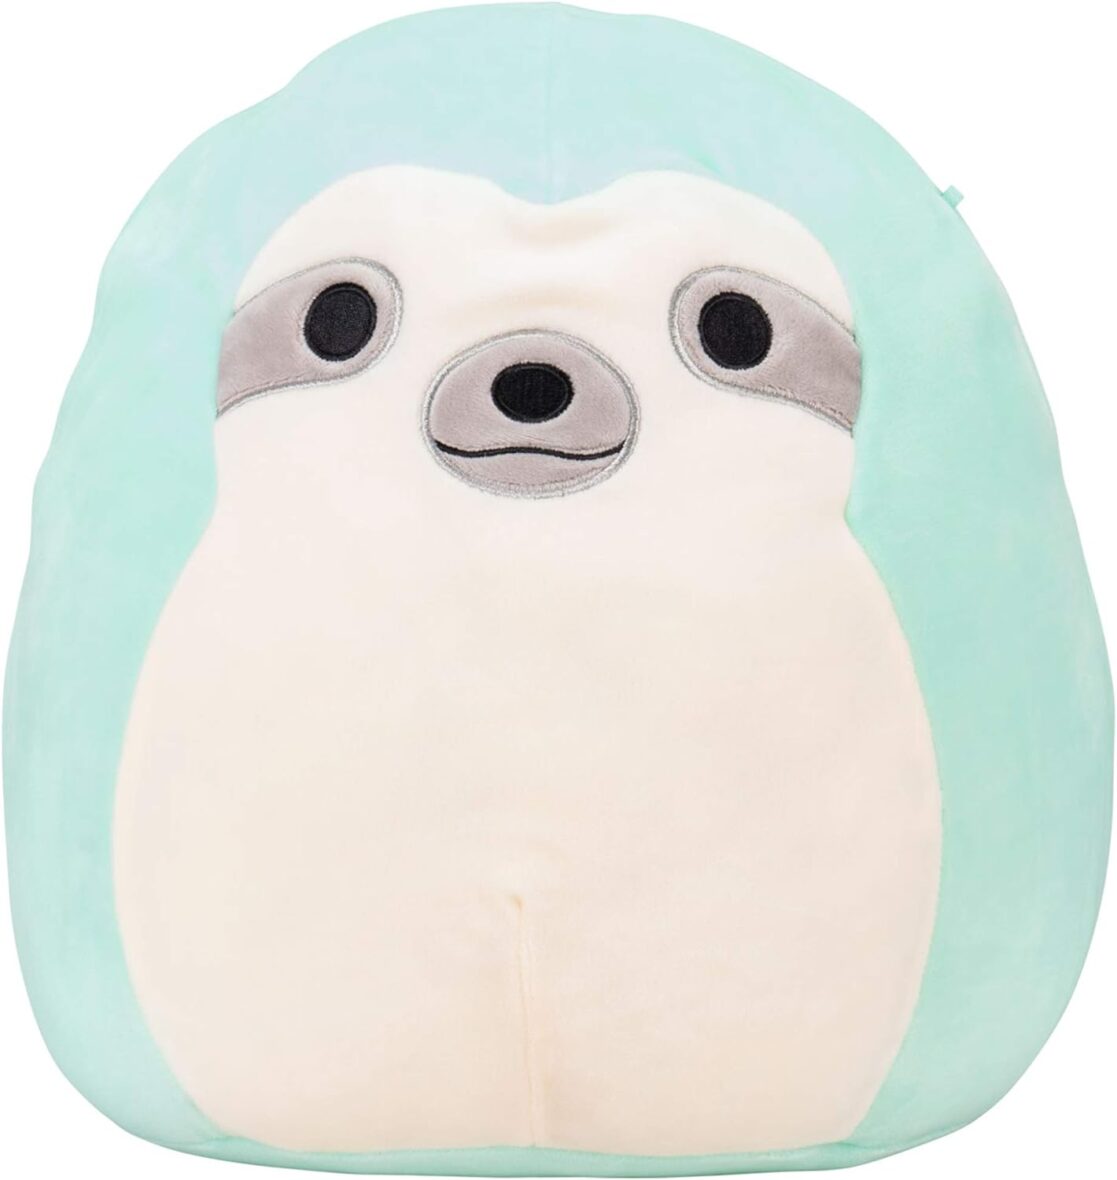 Squishmallows Official Kellytoy Plush 12″ Aqua The Sloth- Ultrasoft Stuffed Animal Plush Toy